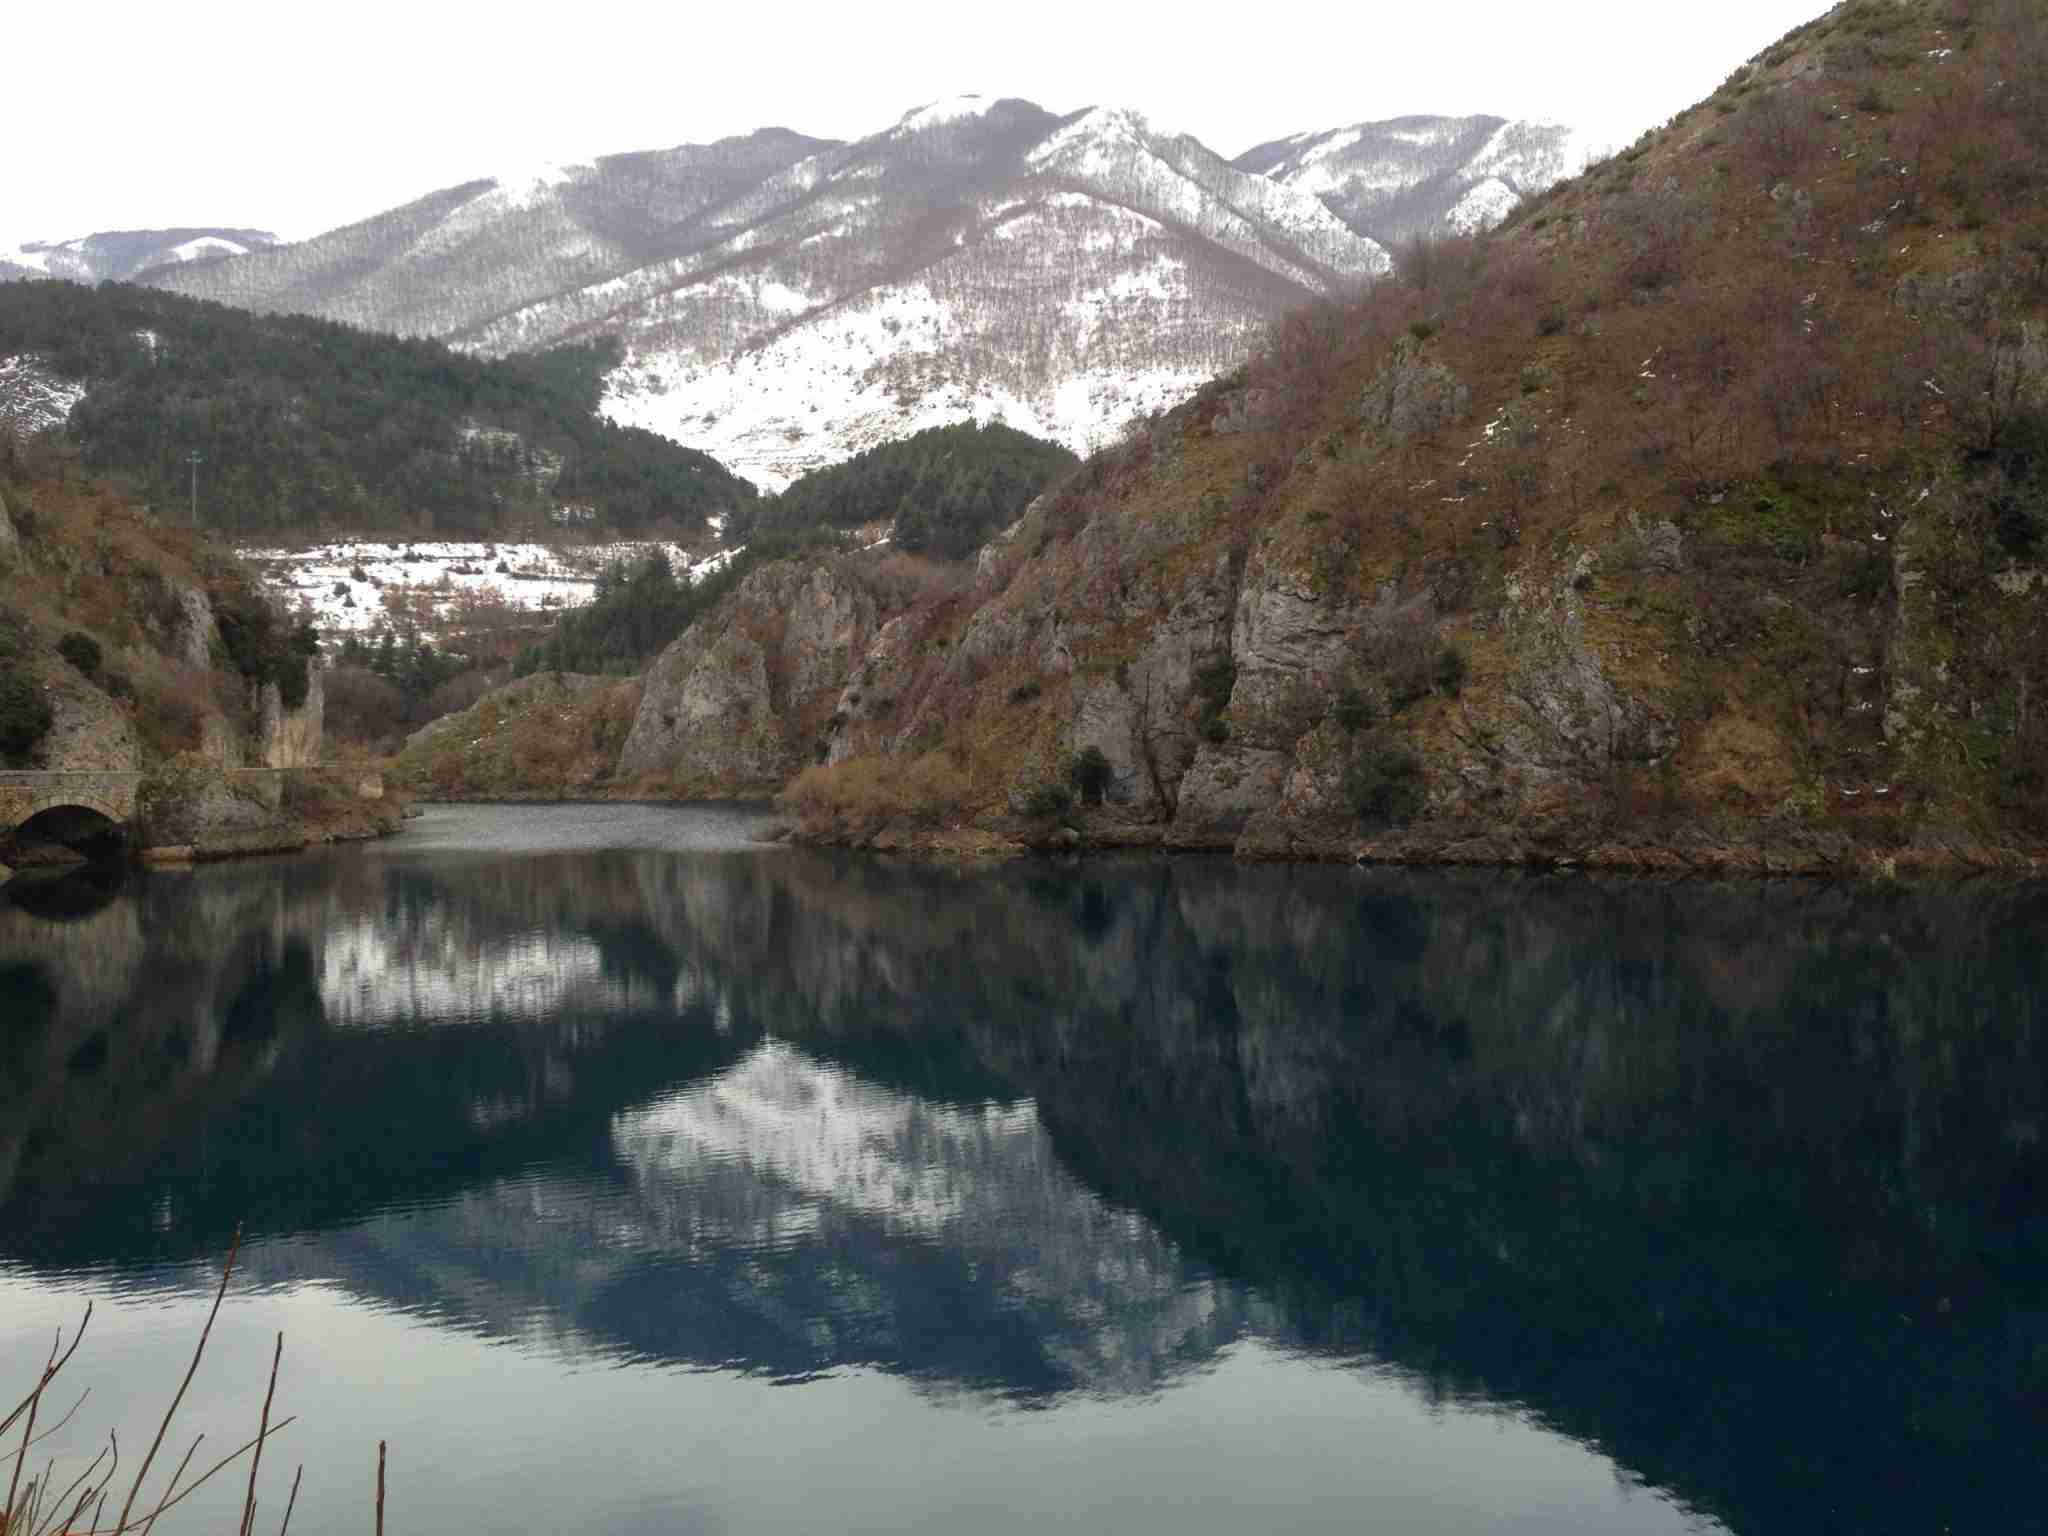 Lake below Scanno